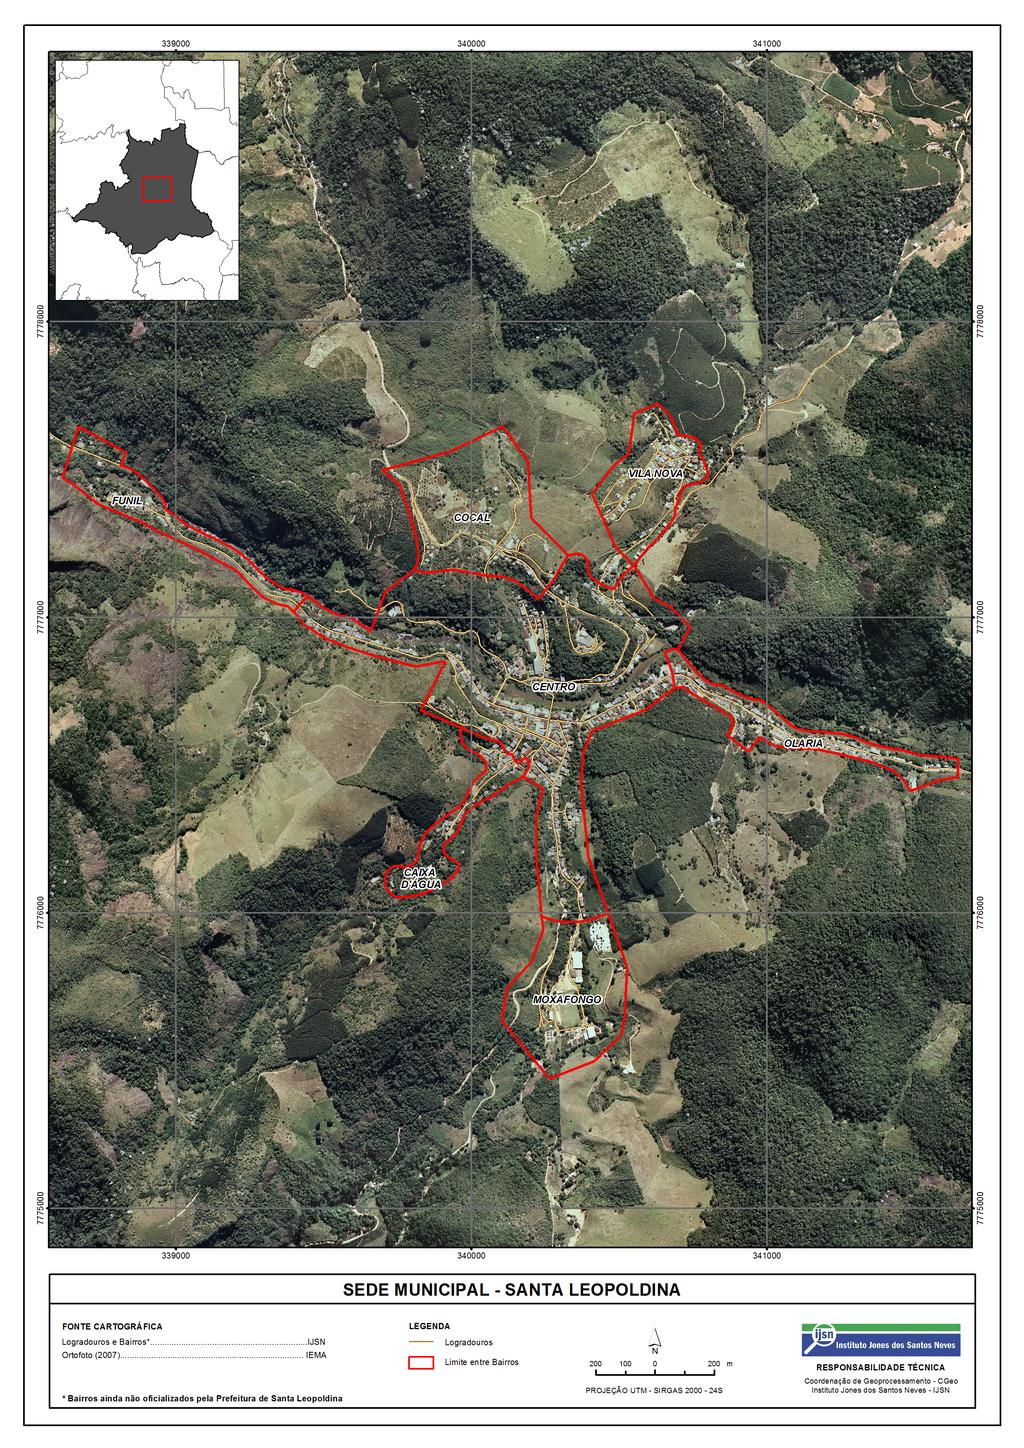 164 ANEXO E Mapa panorâmico do centro da cidade de Santa Leopoldina/ES. Fonte: http://www.